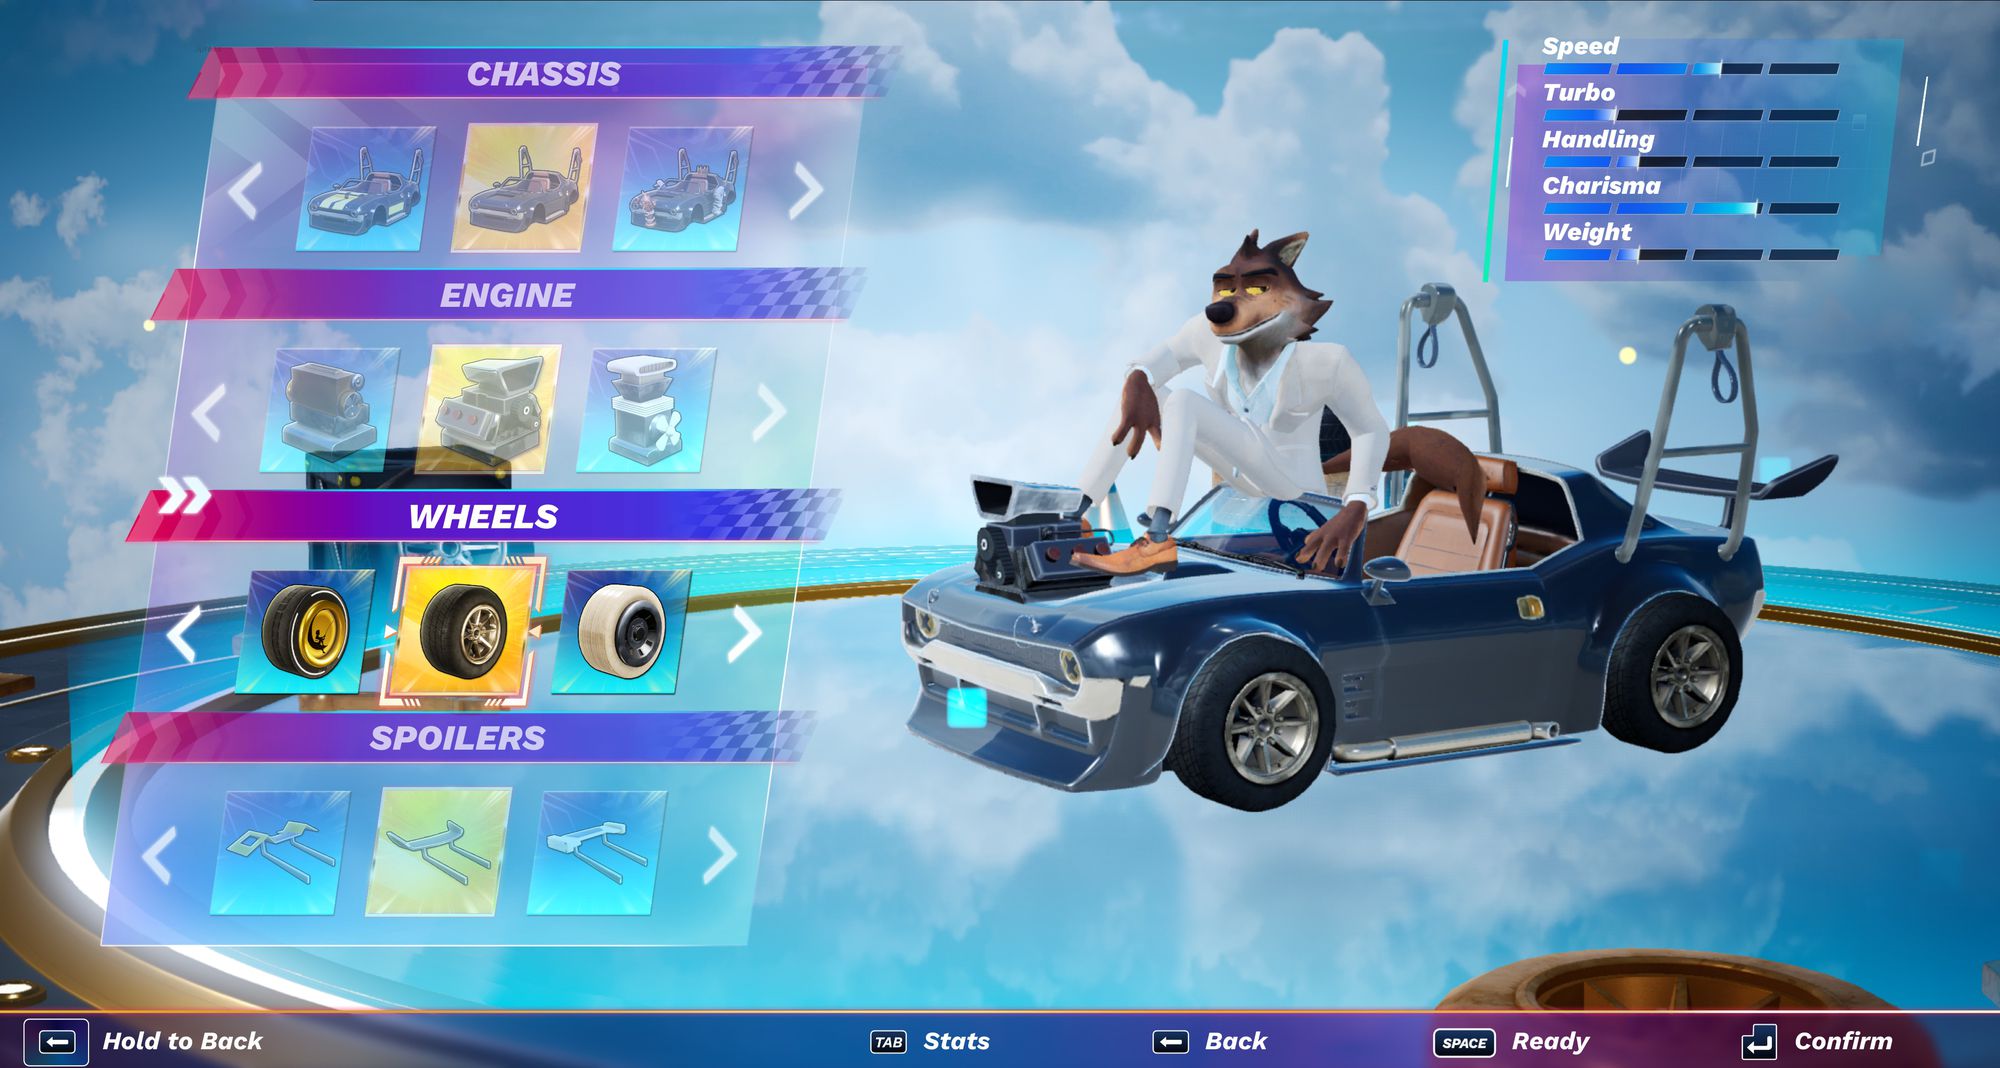 DreamWorks AllStar Kart Racing announced for Switch